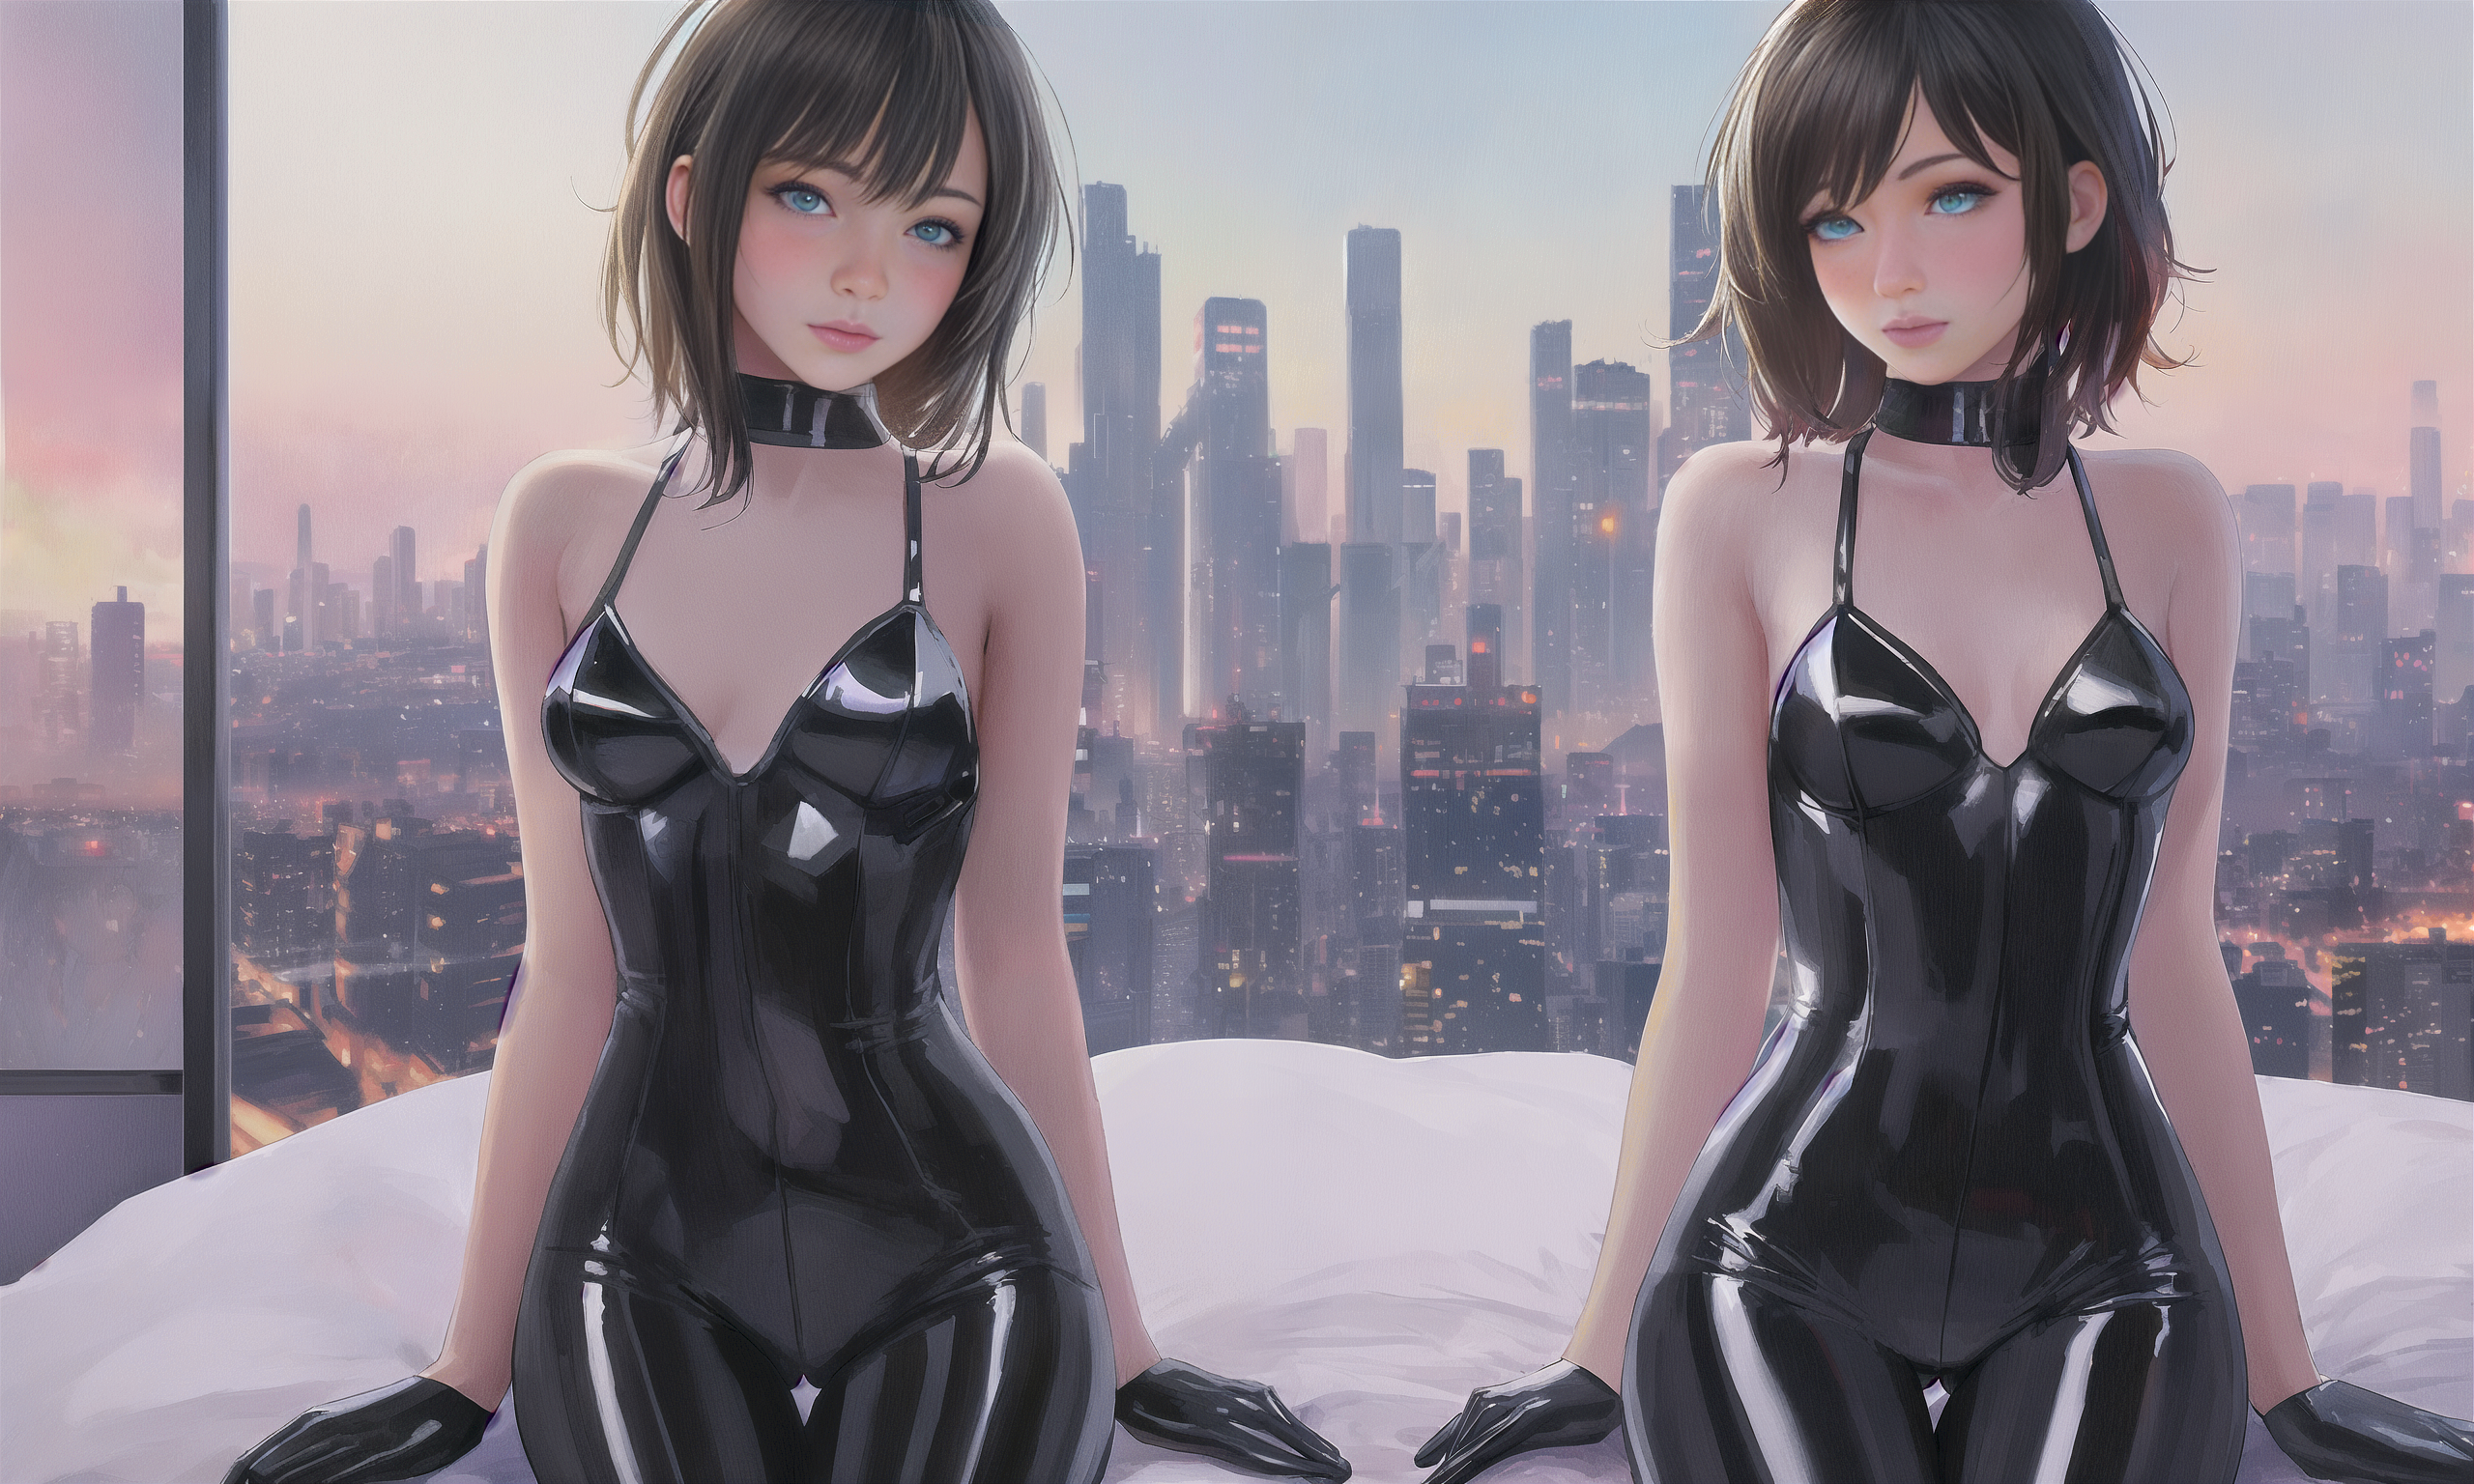 Anime 2560x1536 latex cyberpunk anime girls blue eyes gloves city city lights small boobs latex bodysuit choker